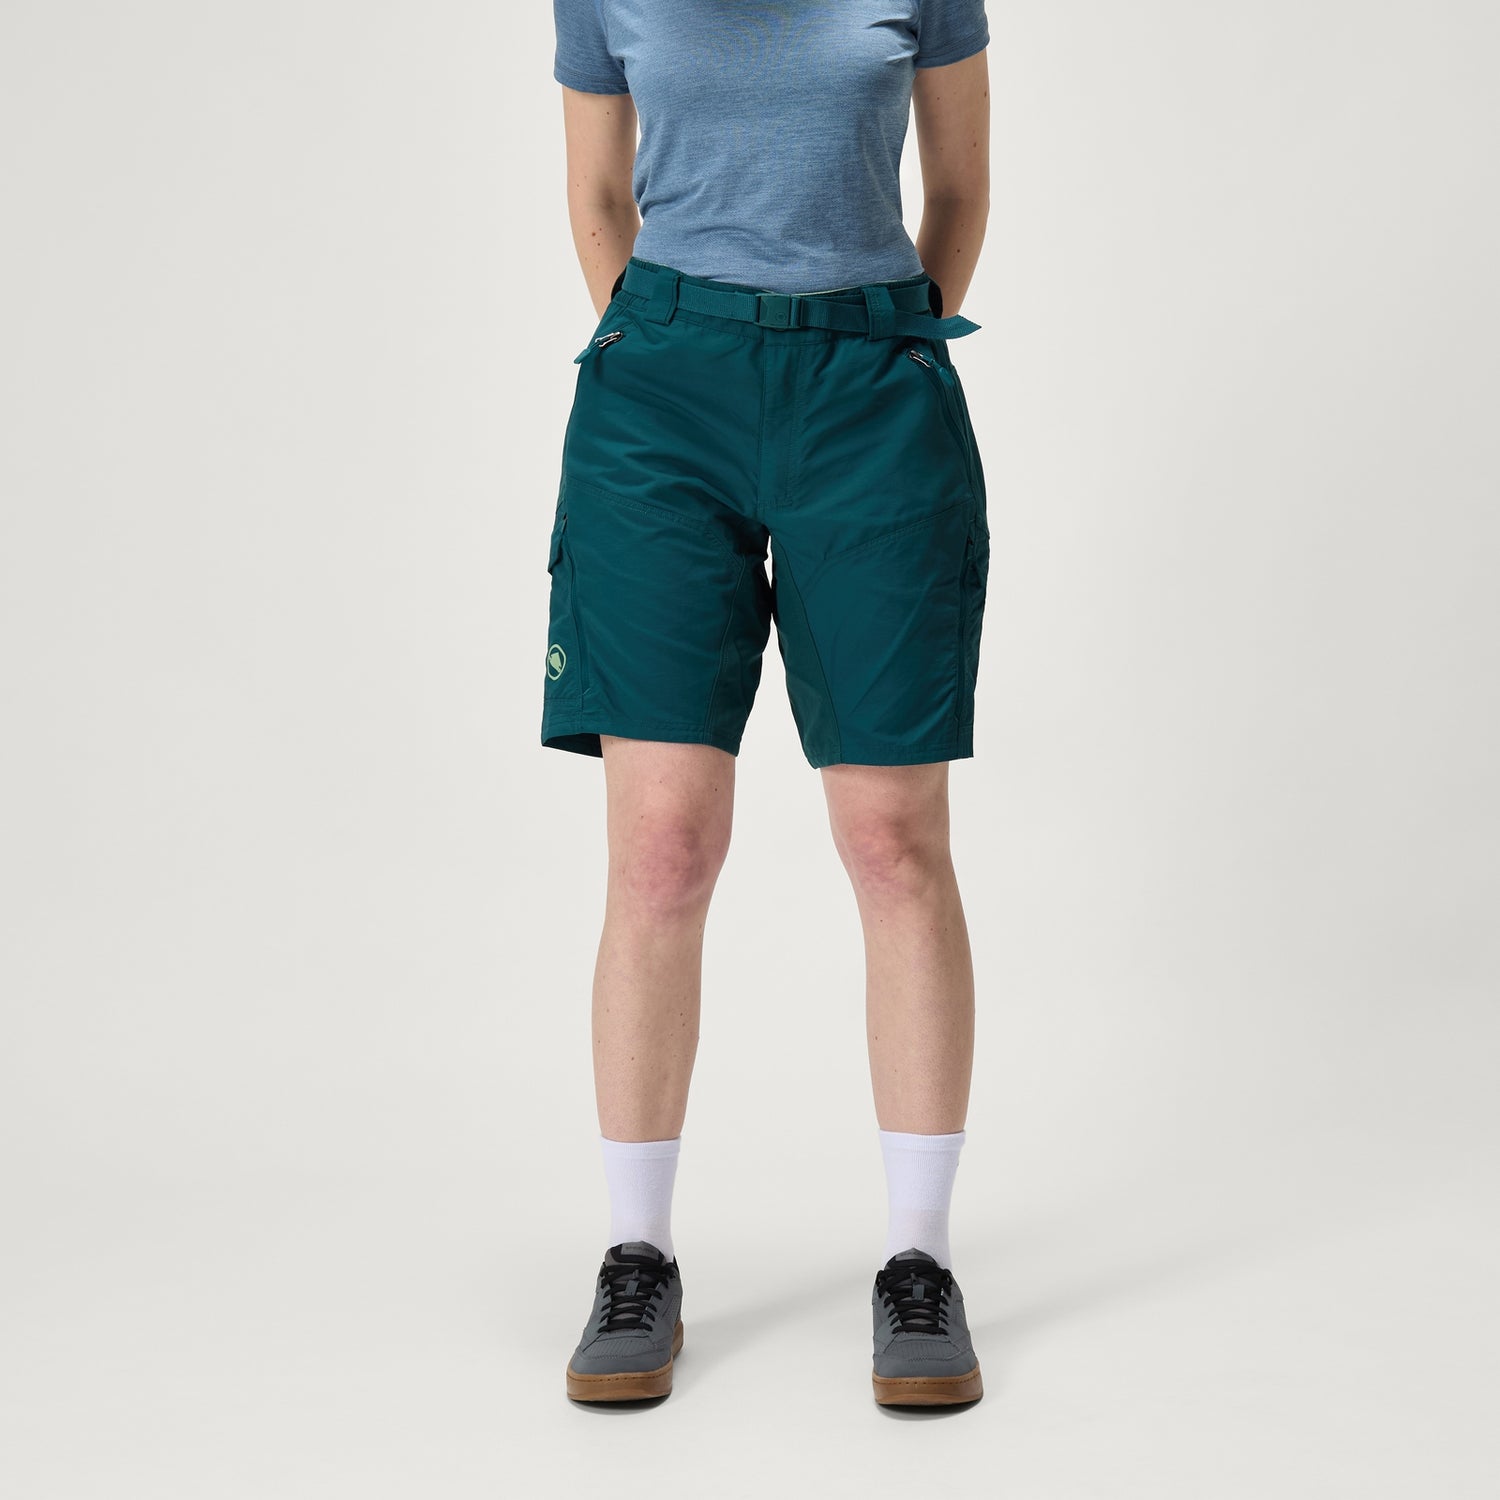 Women's Hummvee Short with Liner - Deep Teal - XL